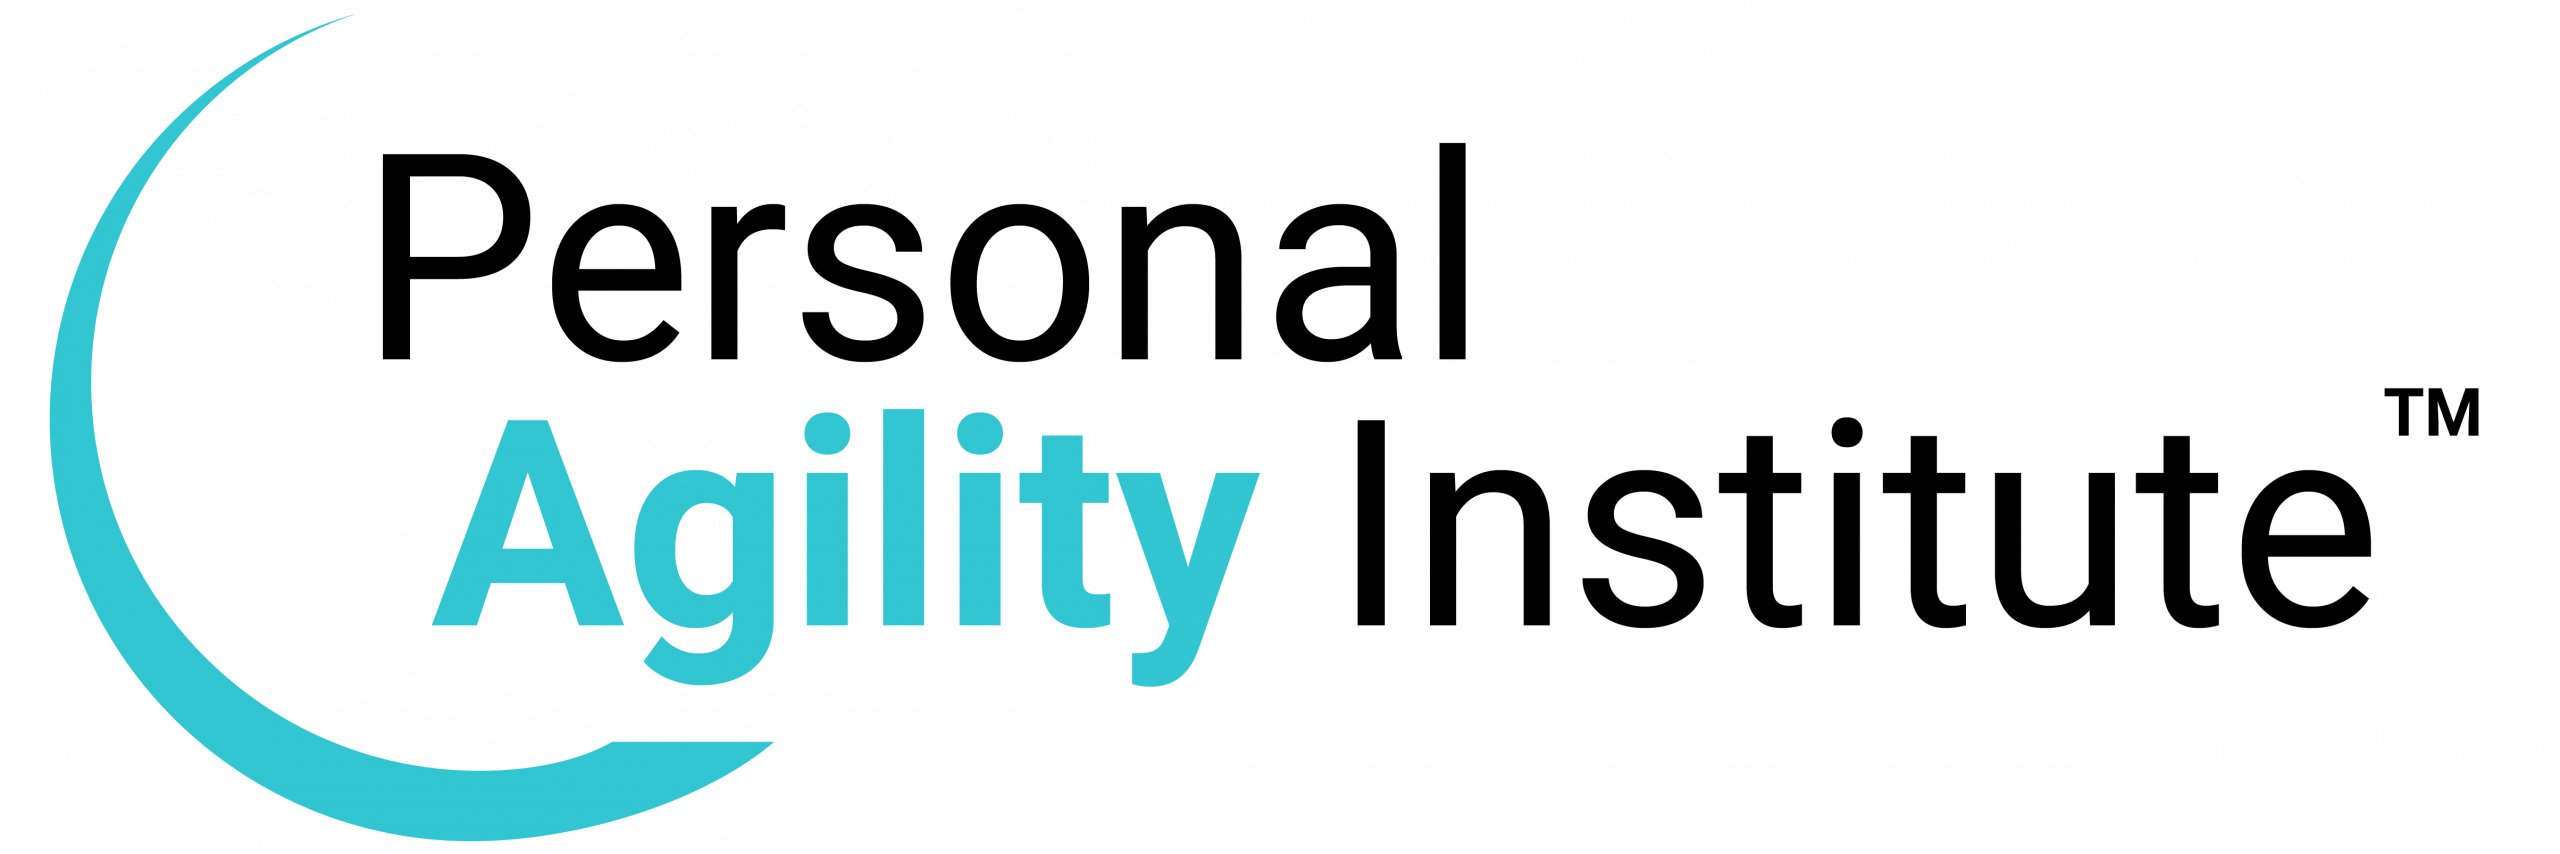 Personal Agility Institute logo